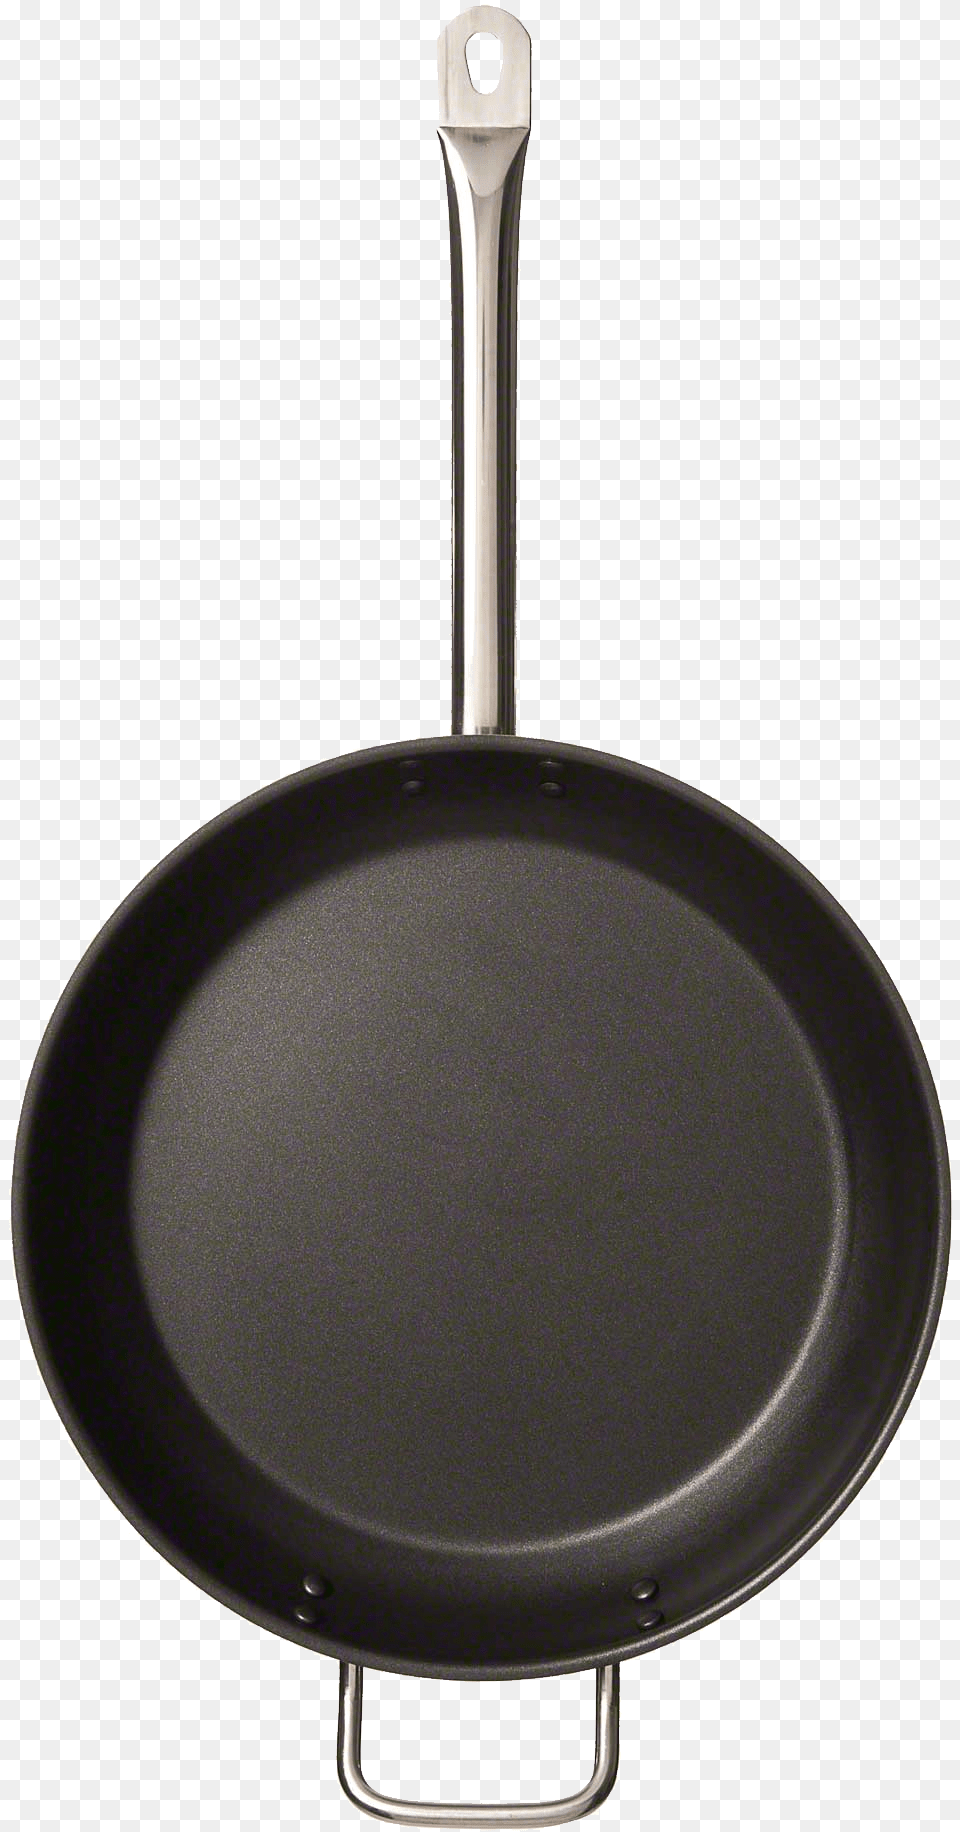 Frying Pan Top View, Cooking Pan, Cookware, Frying Pan Free Png Download